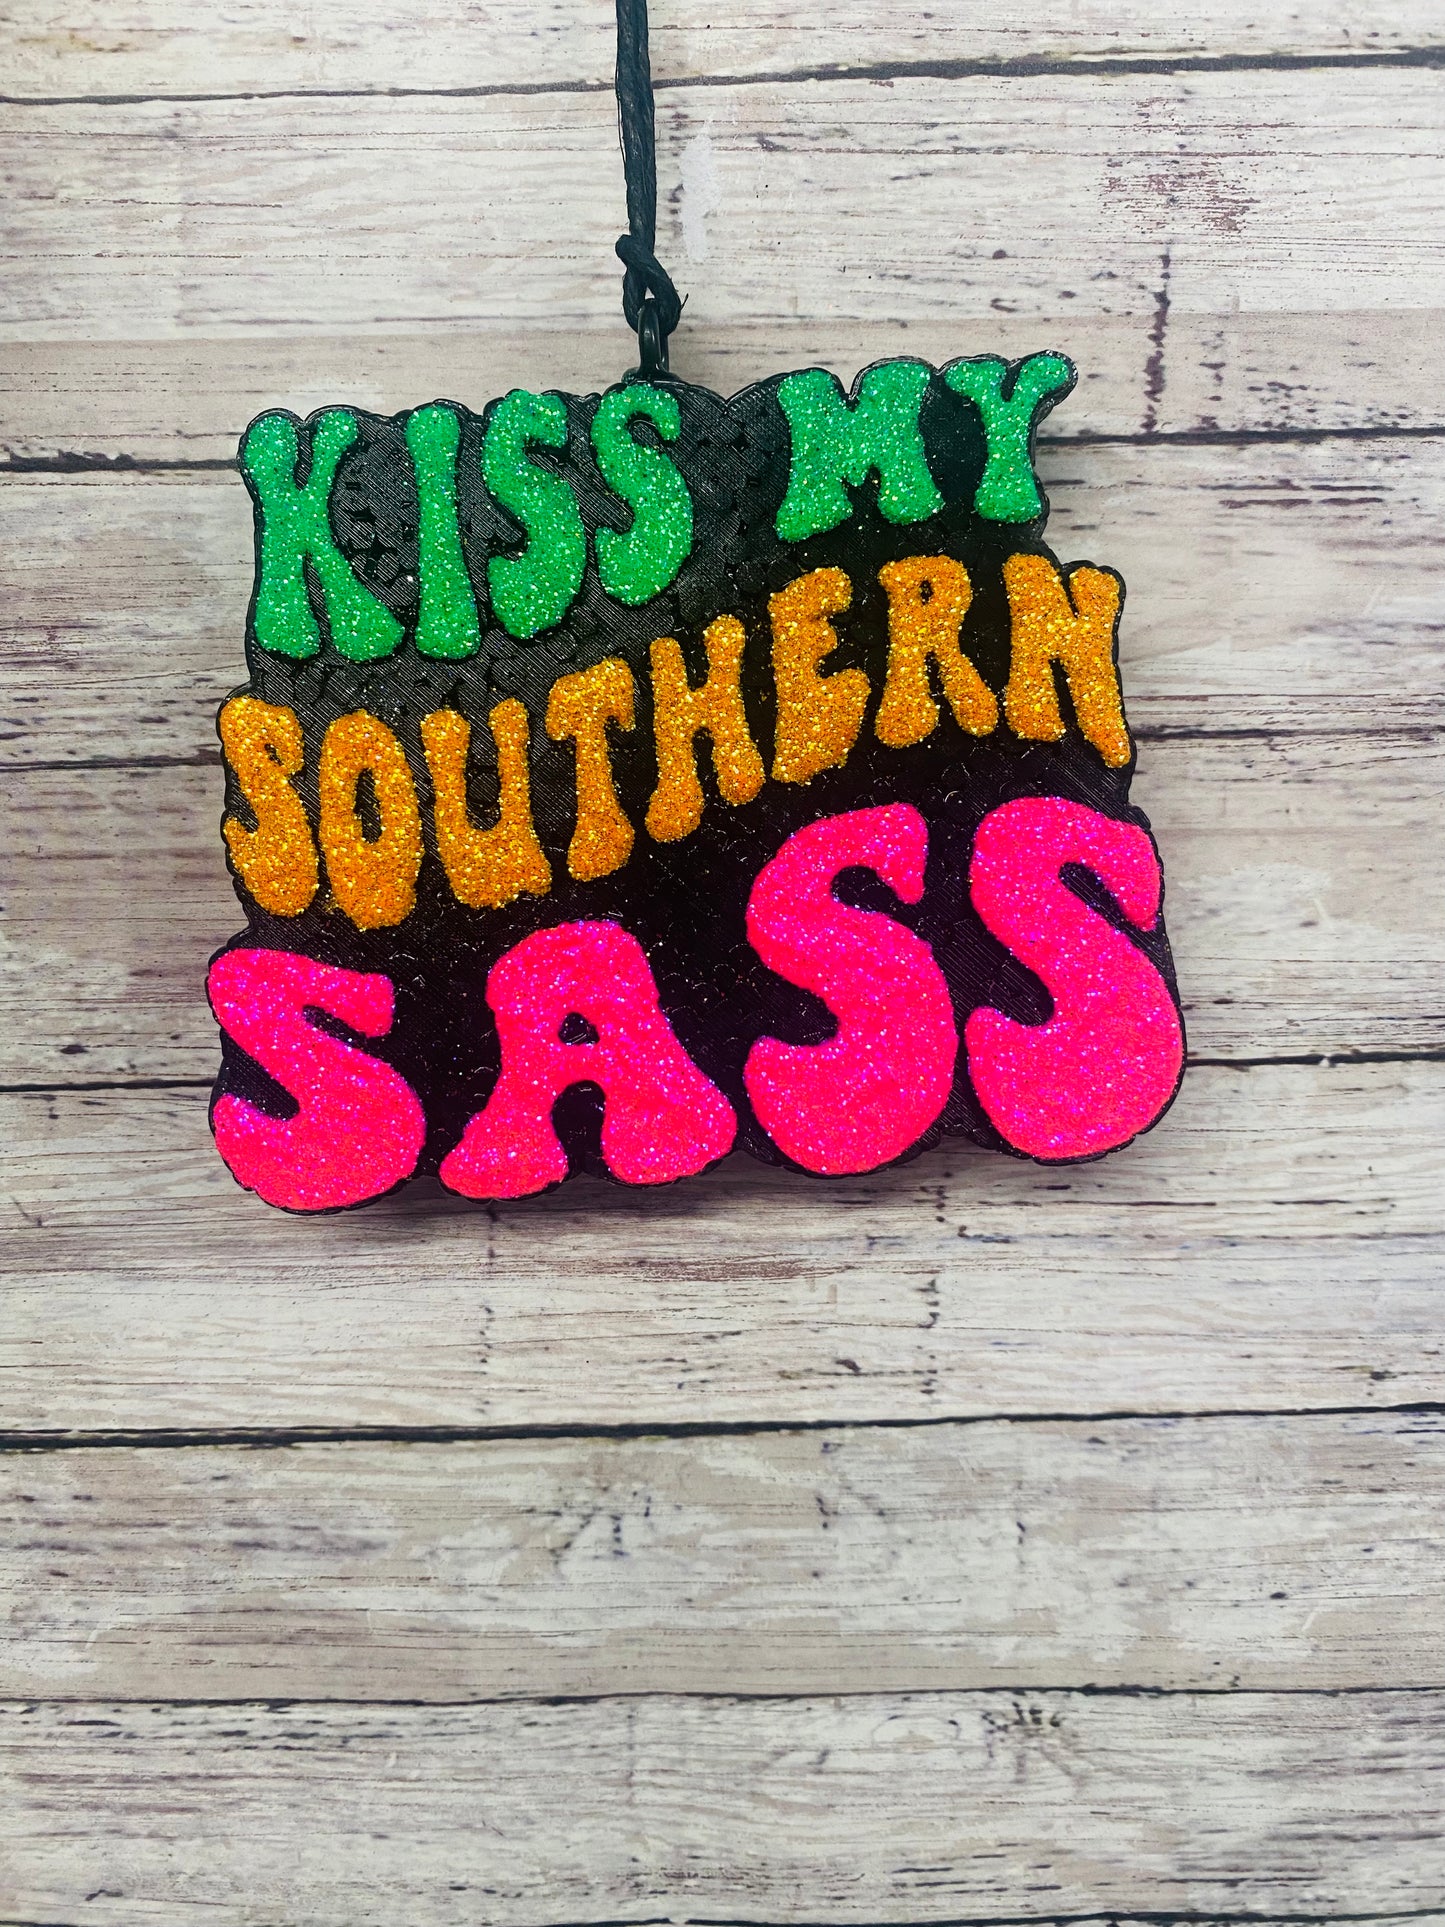 Kiss My Southern Sass